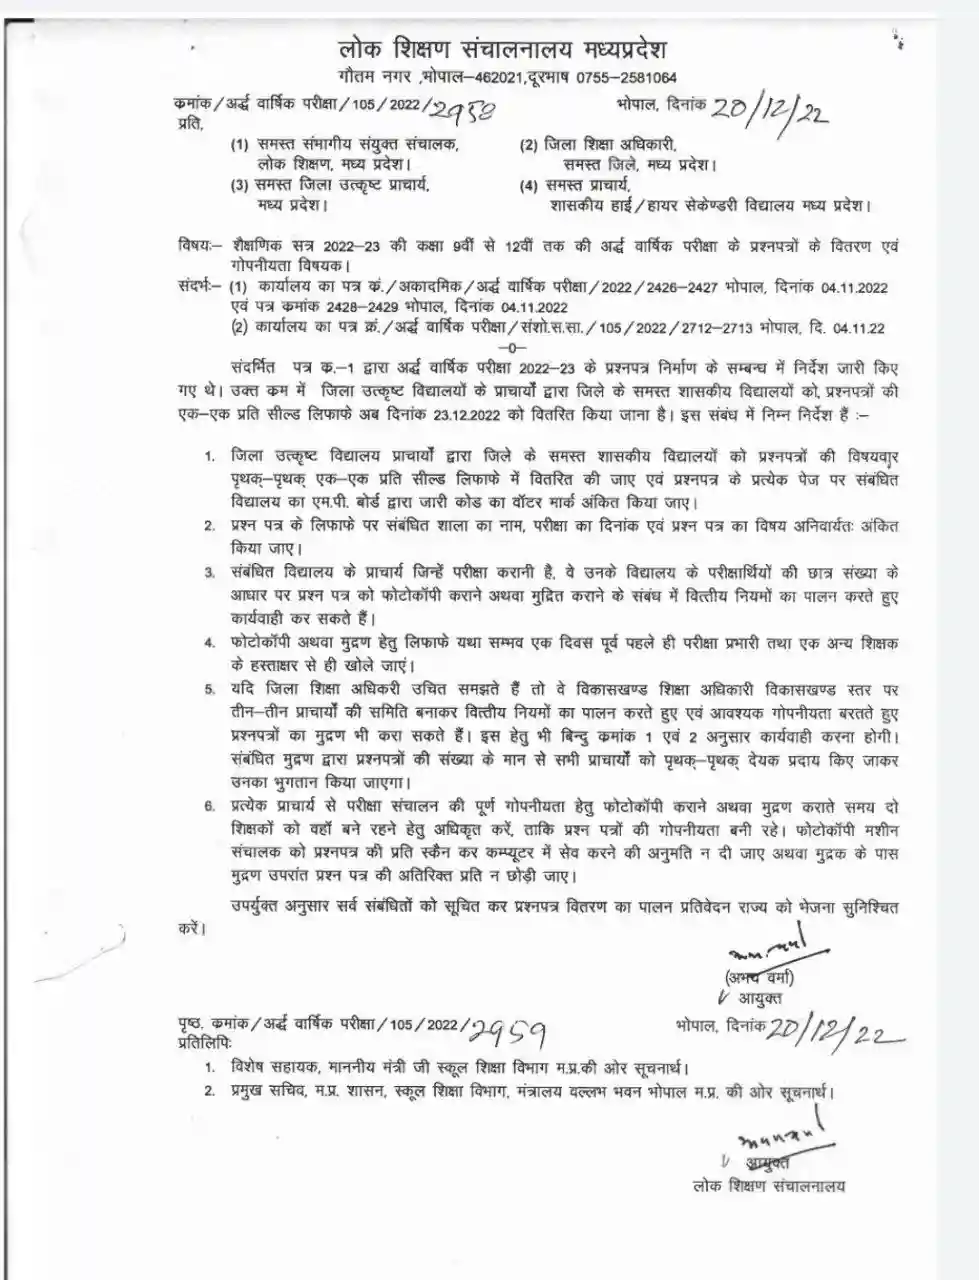 MP Board Ardhvarshik Paper Leak Update